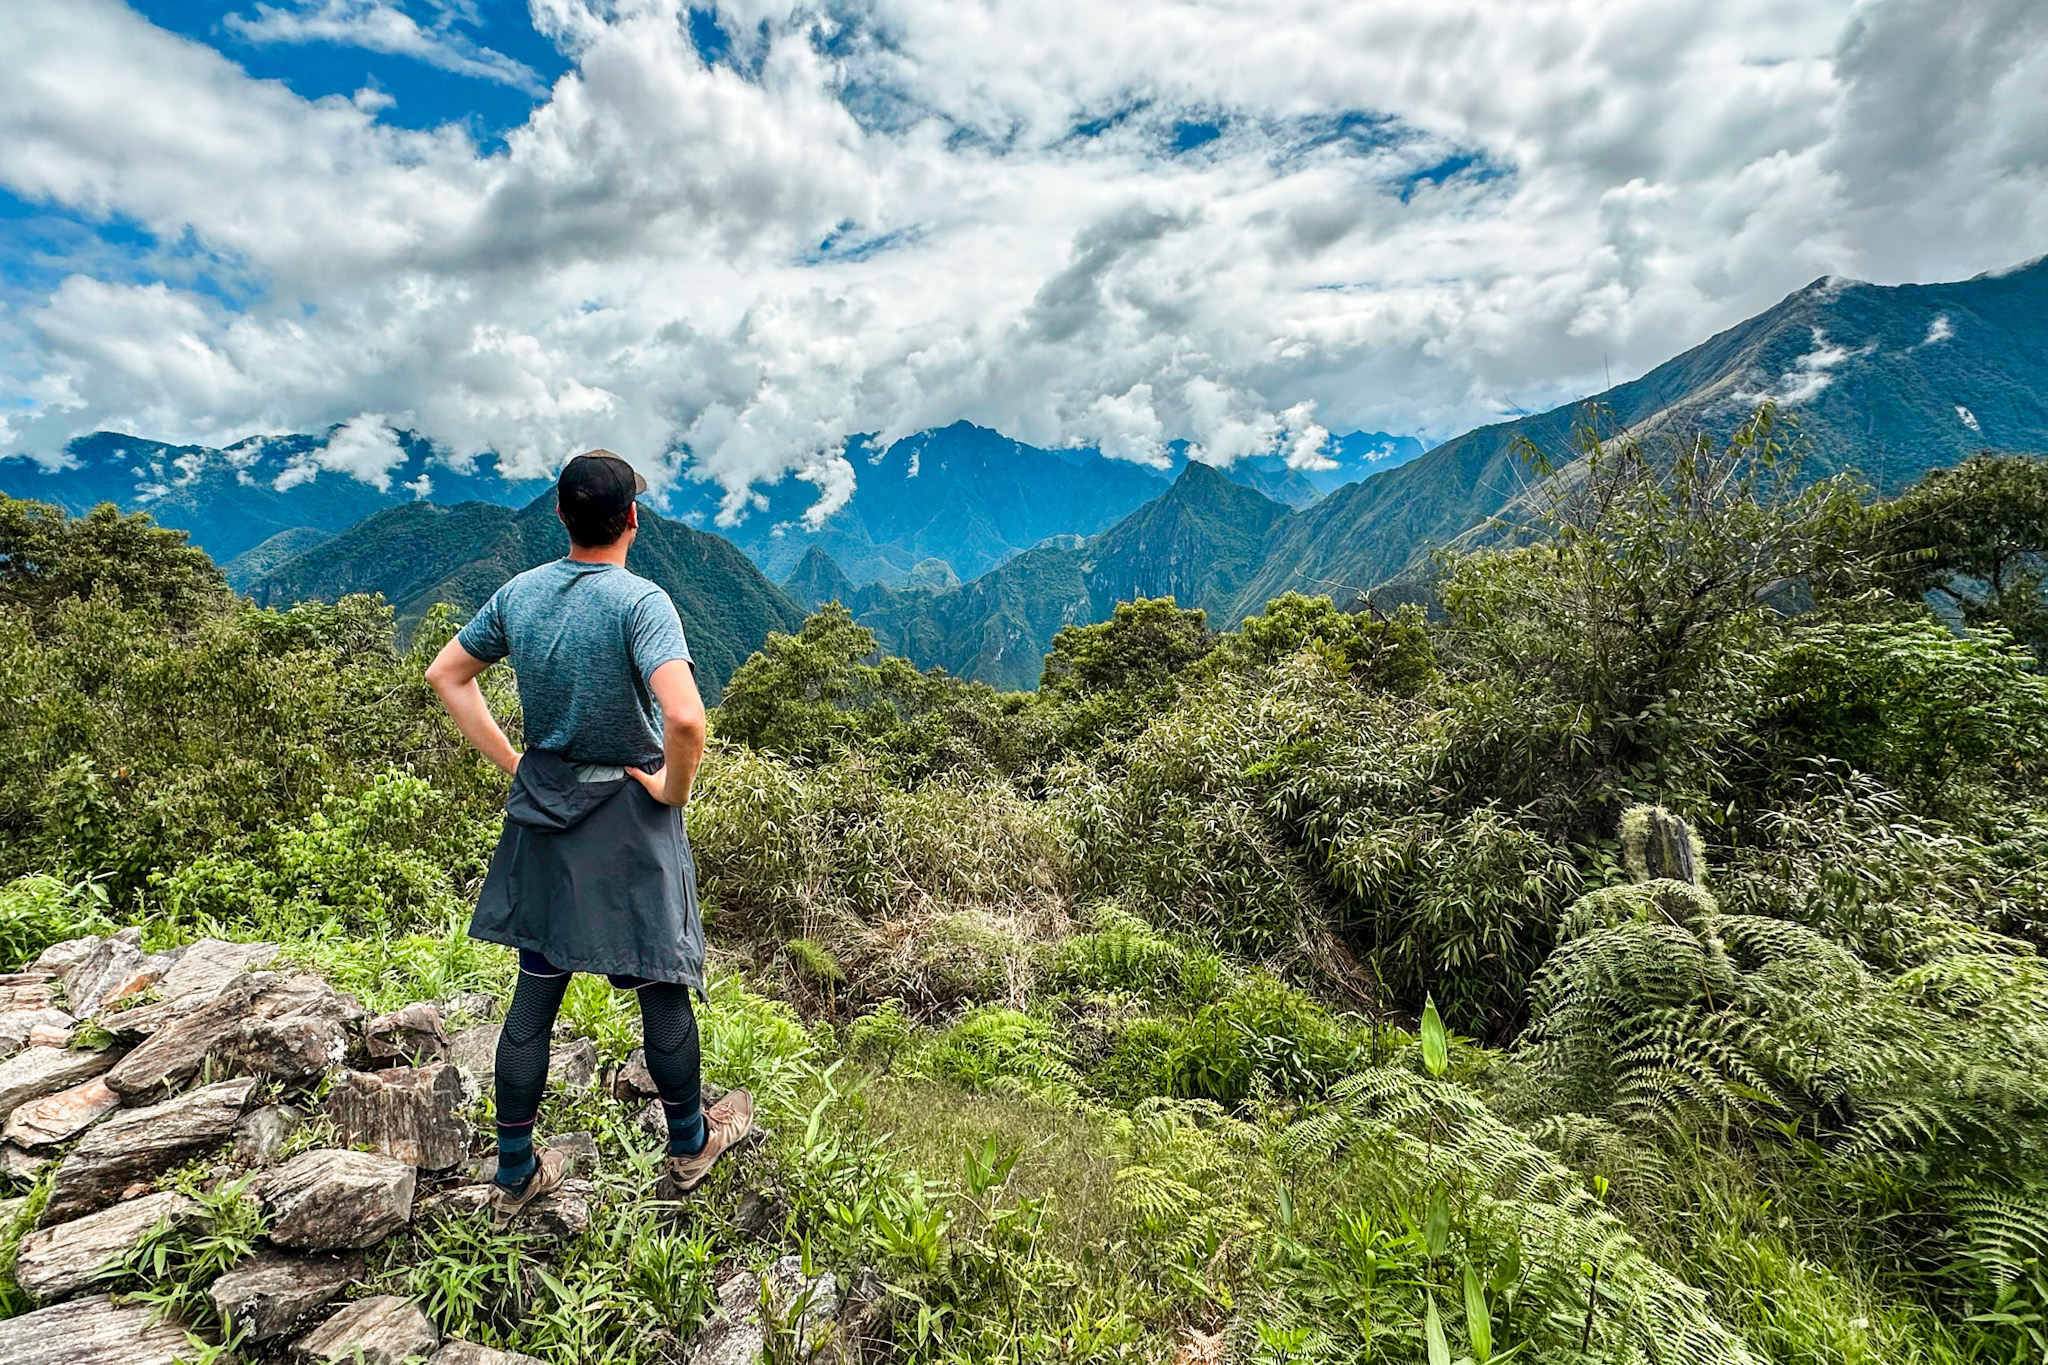 Interesting Facts about Machu Picchu in Peru: You can hike to Machu Picchu along the Salkantay Trek